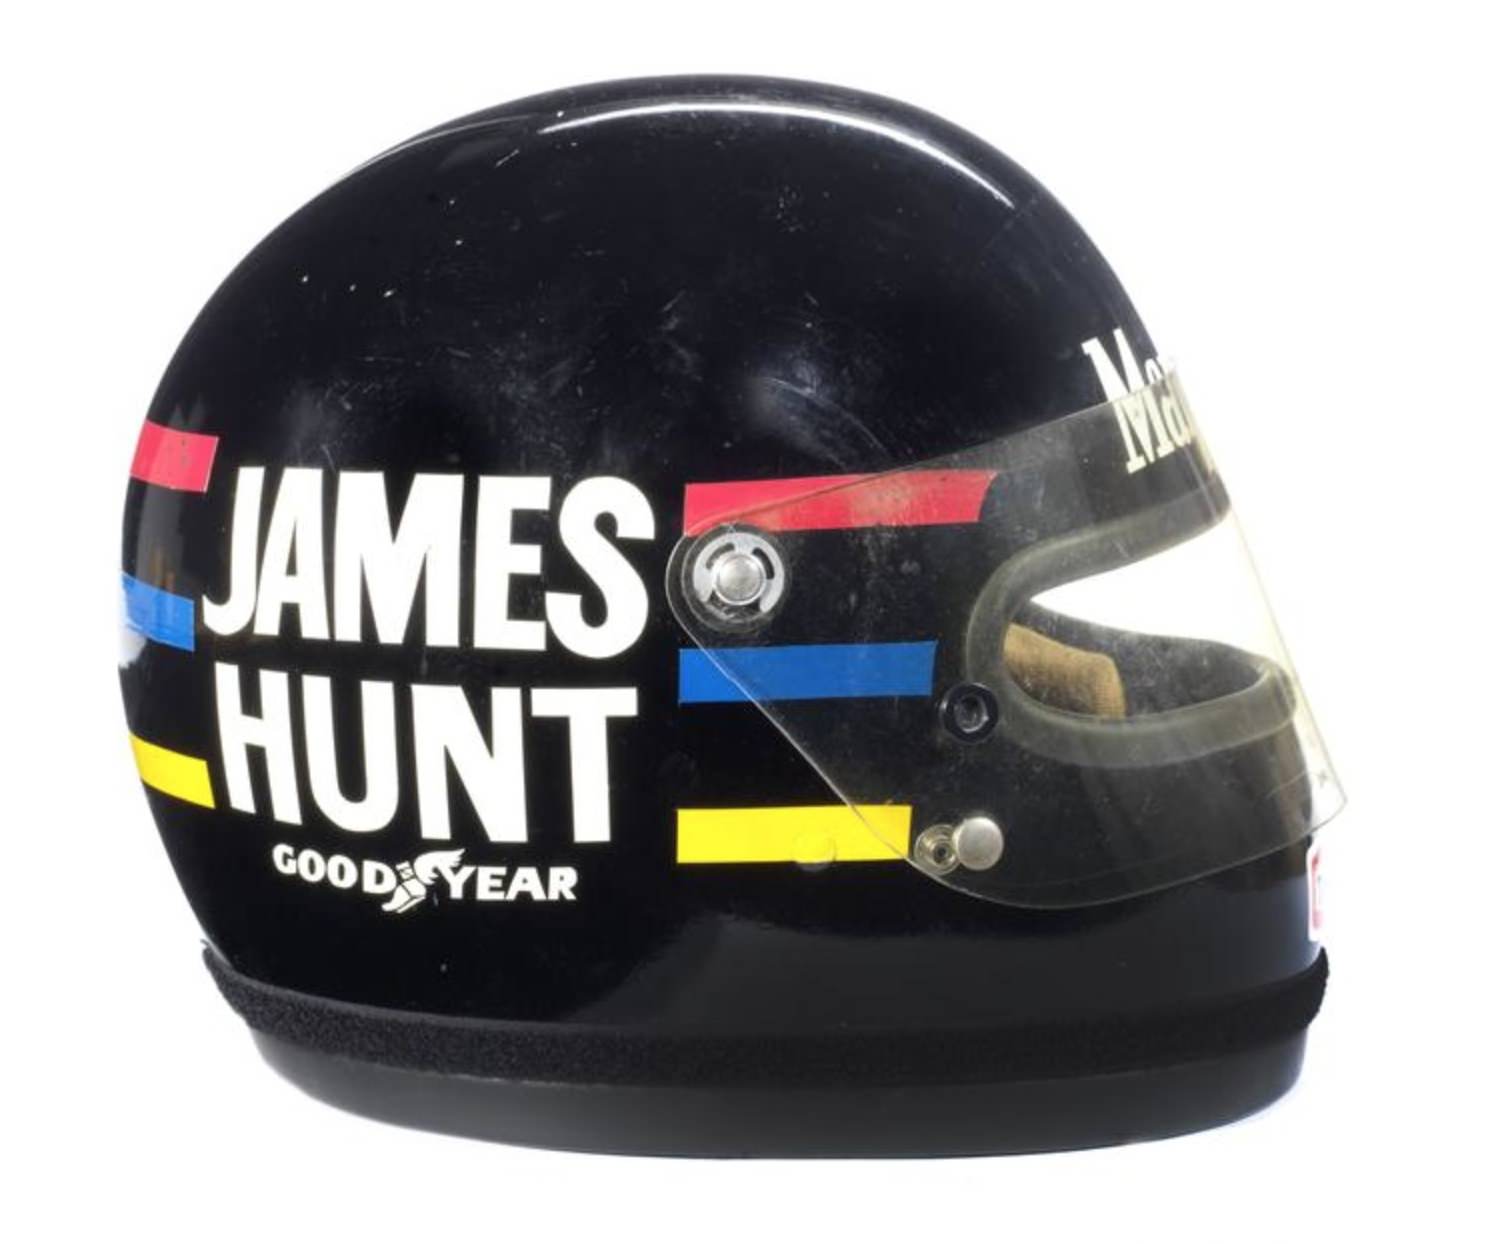 15-james-hunt-1976-helmet-bell-star-smal